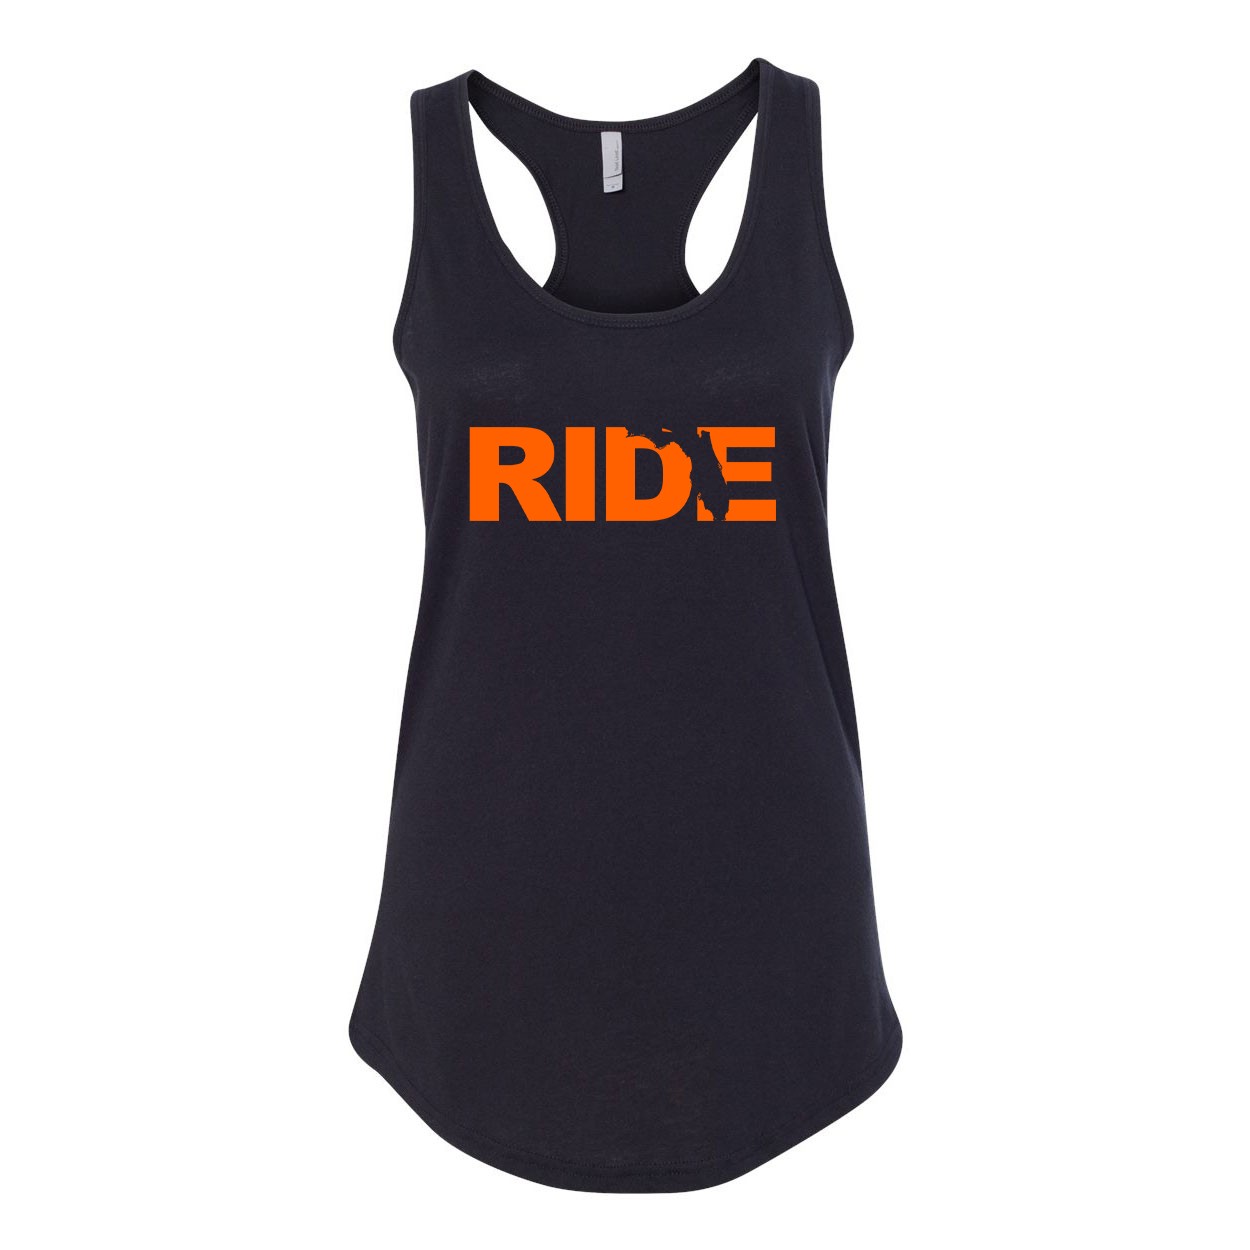 Ride Florida Classic Women's Racerback Tank Top Black (Orange Logo)